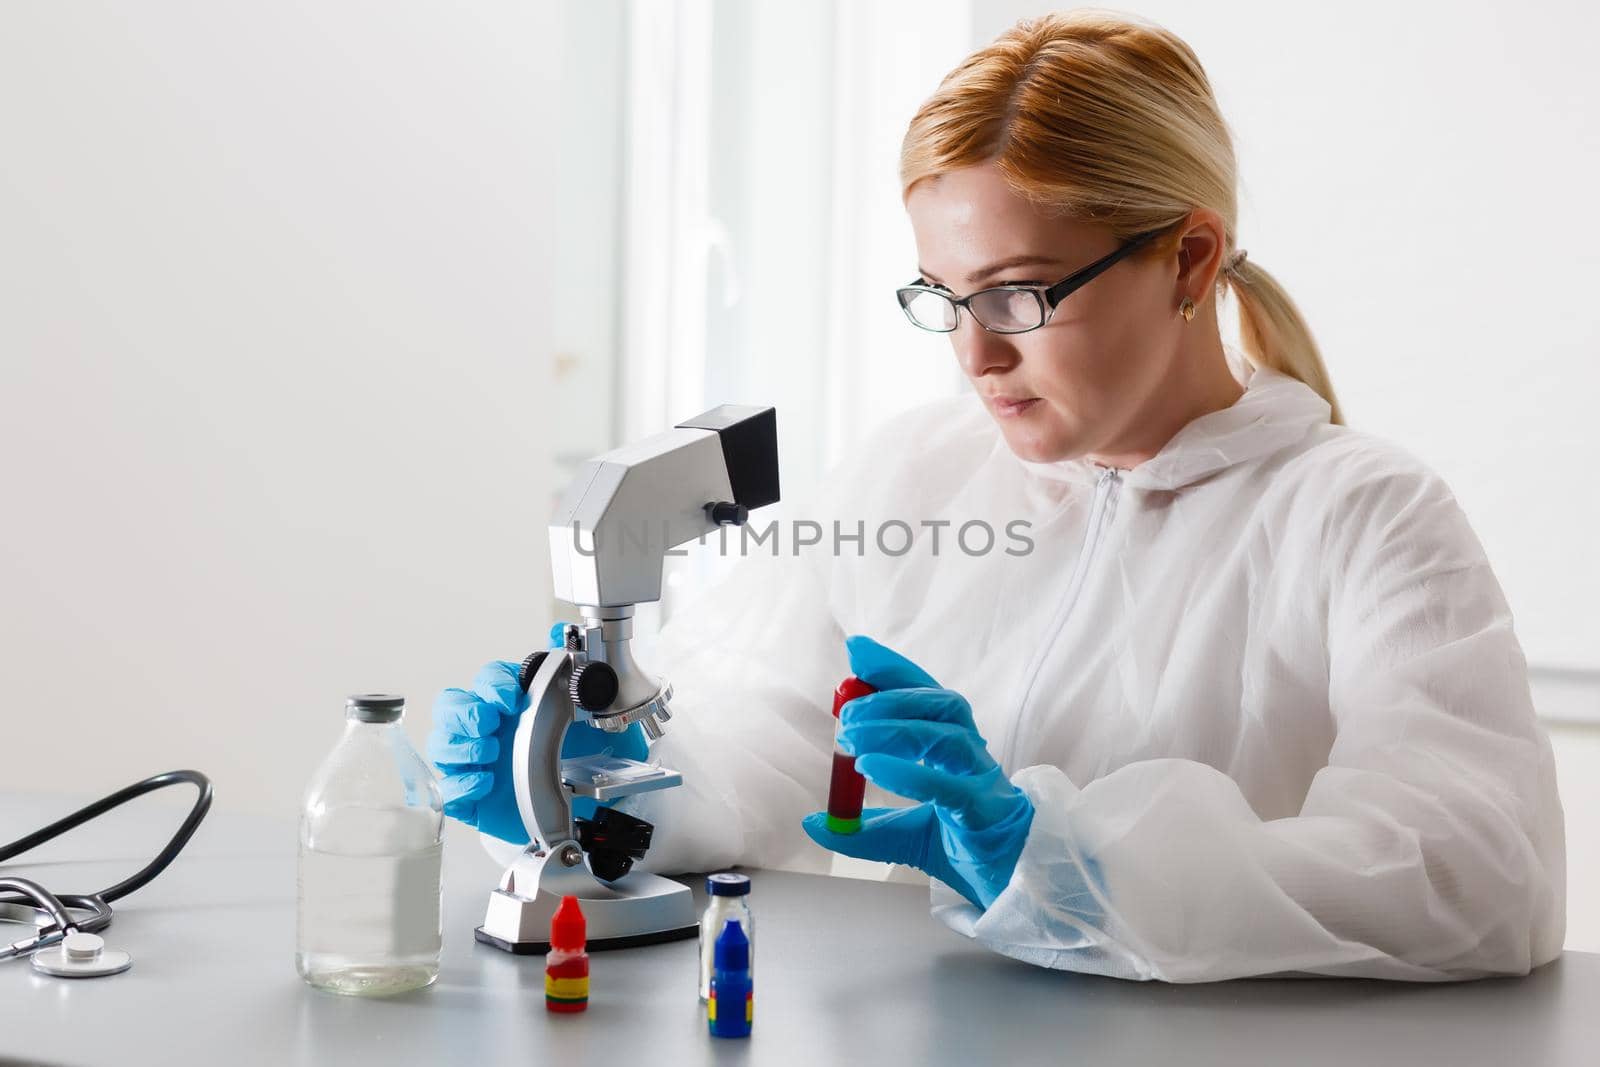 A beautiful female medical or scientific researcher using her microscope in a laboratory.